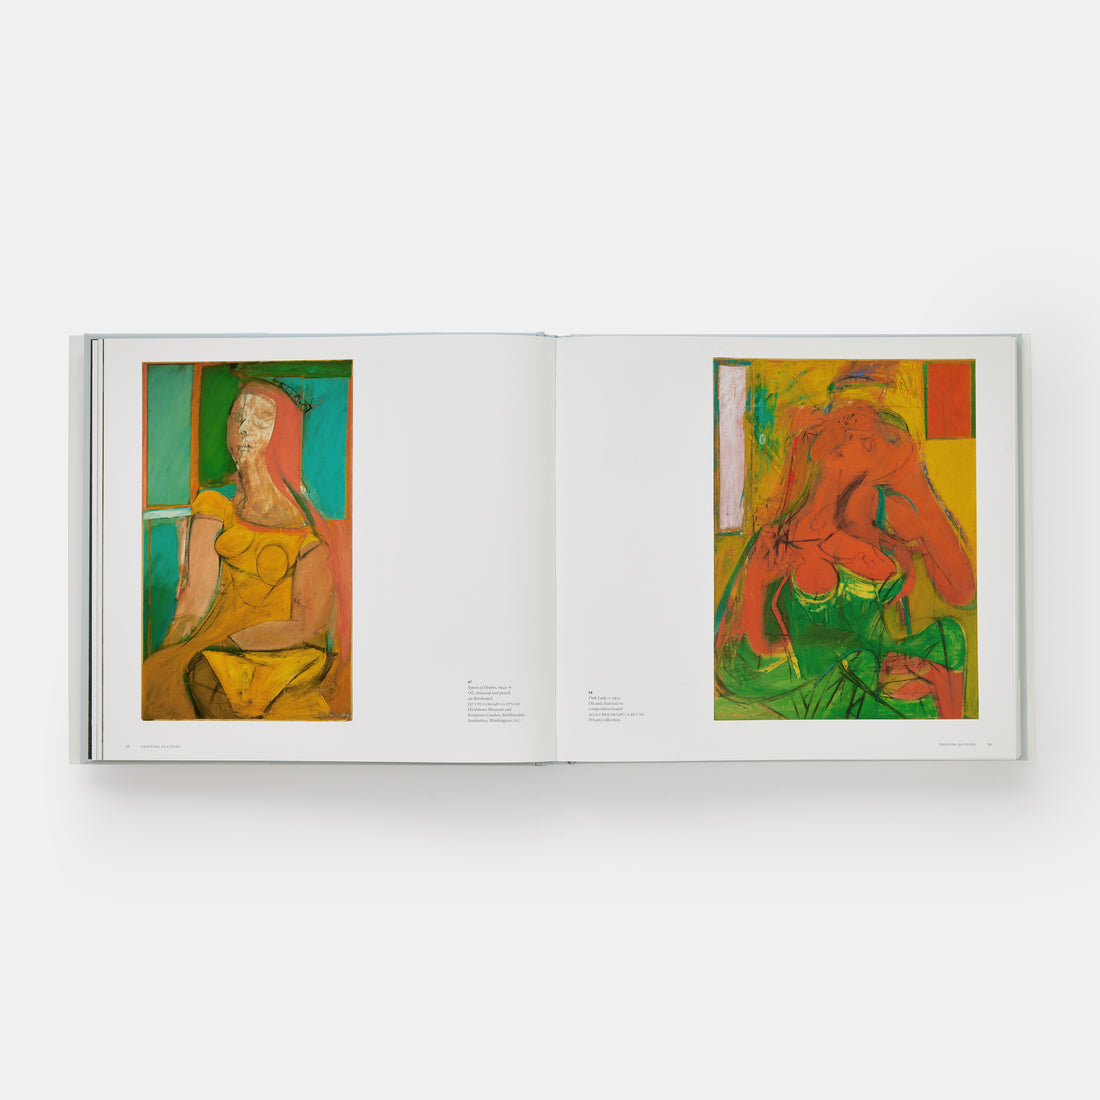 A Way of Living: The Art of Willem de Kooning